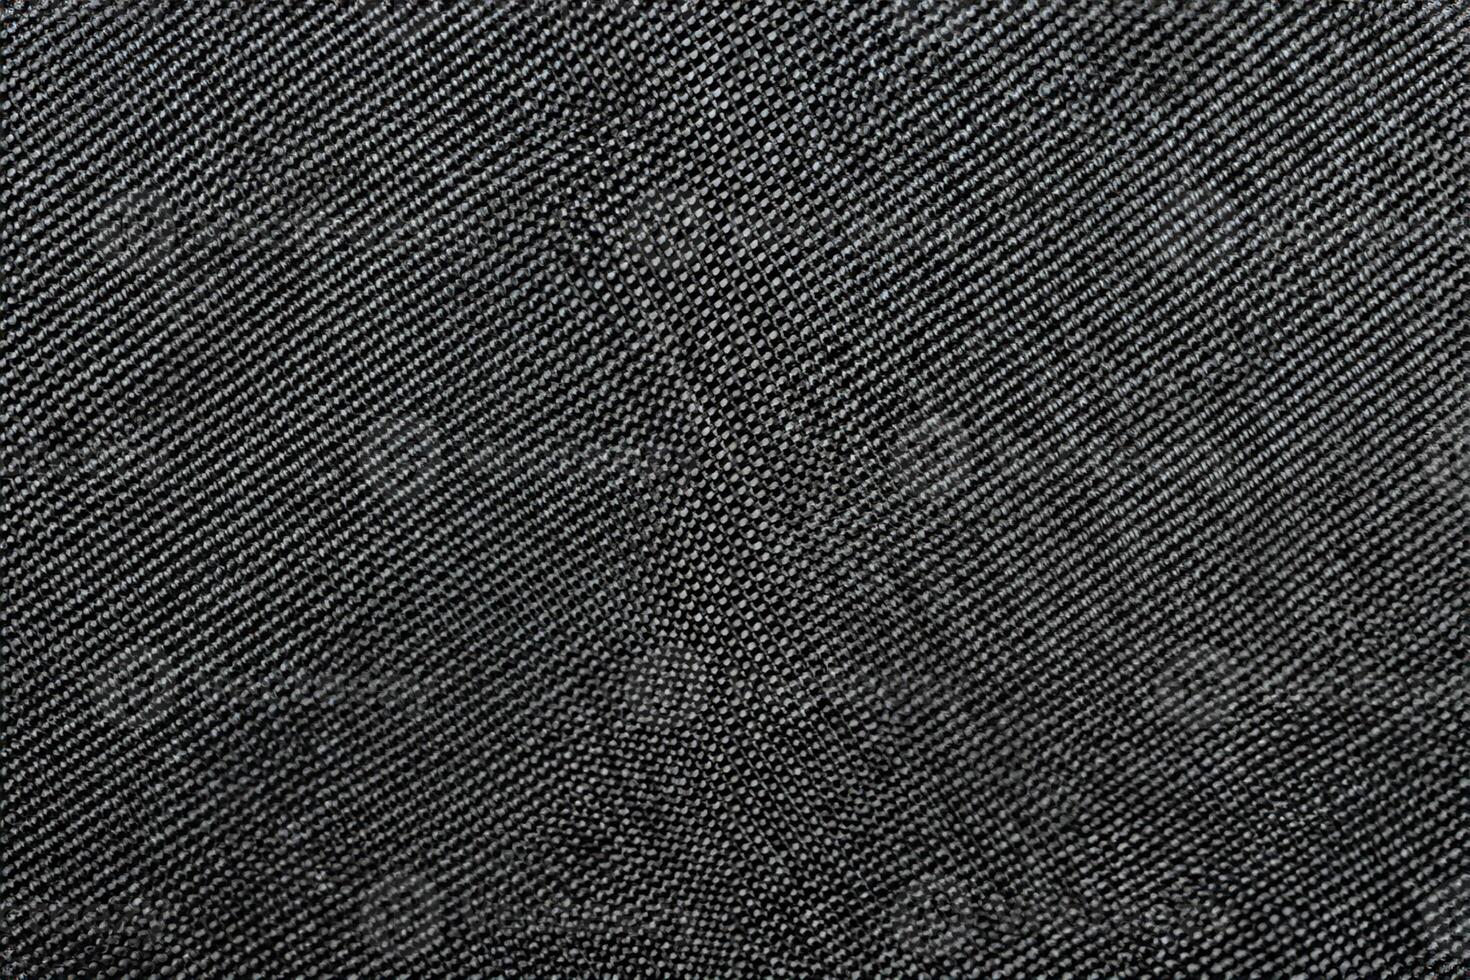 sofa texture on macro focus photo